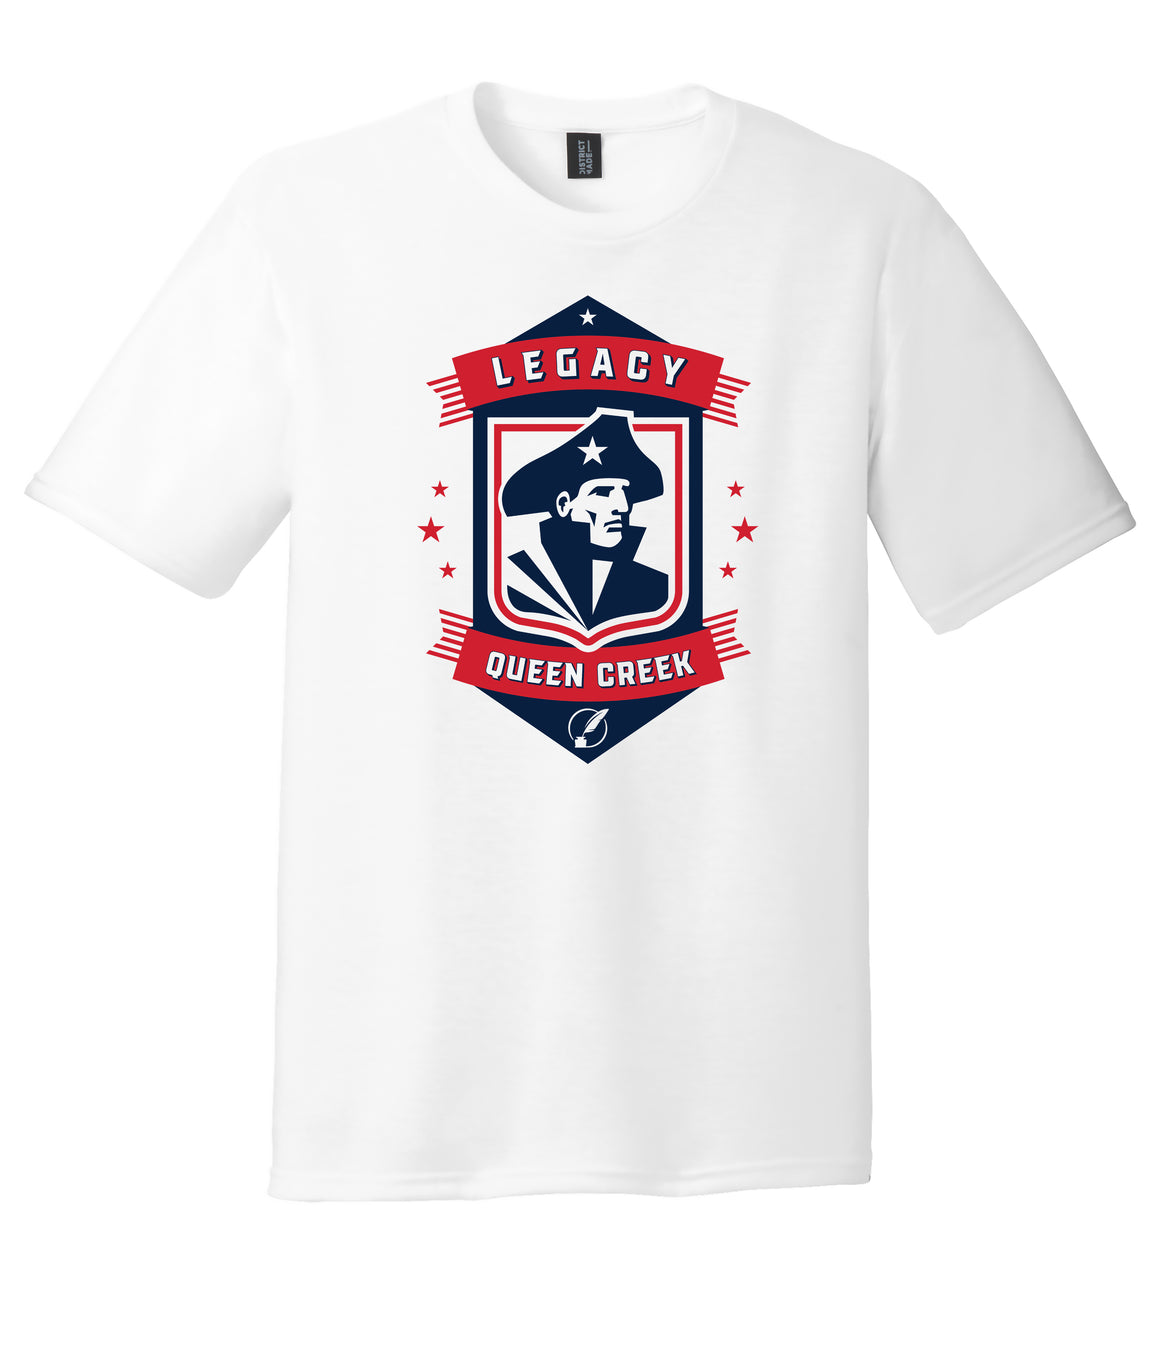 Legacy Traditional School Queen Creek - White Spirit Day Shirt w/Mascot